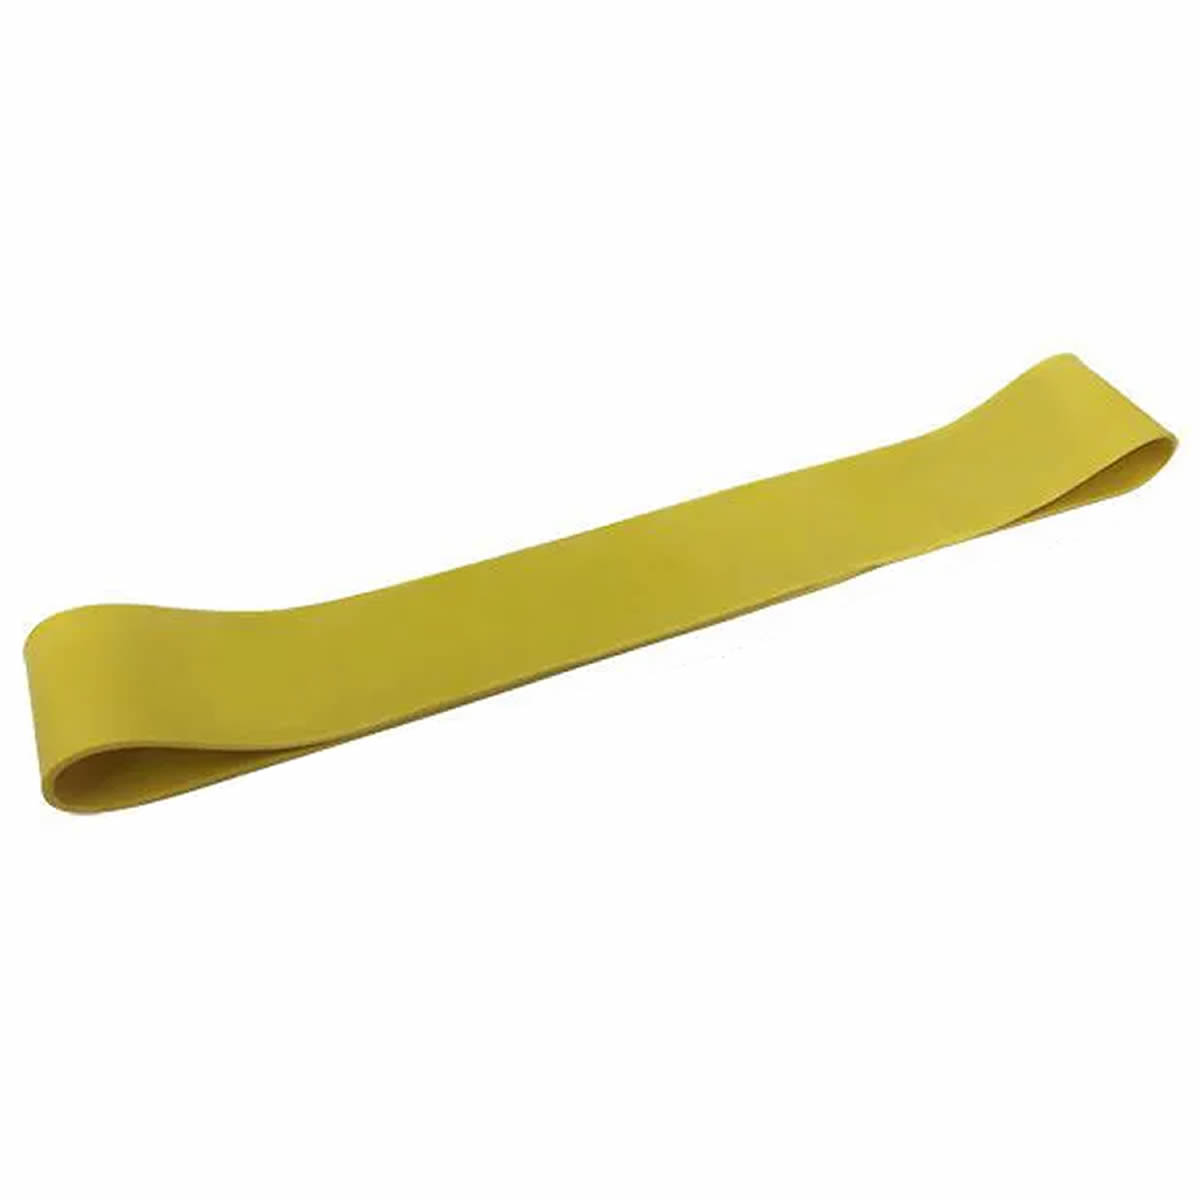 Rubber Mini Band - Elastico de Pilates - Leve - Amarela - Prottector